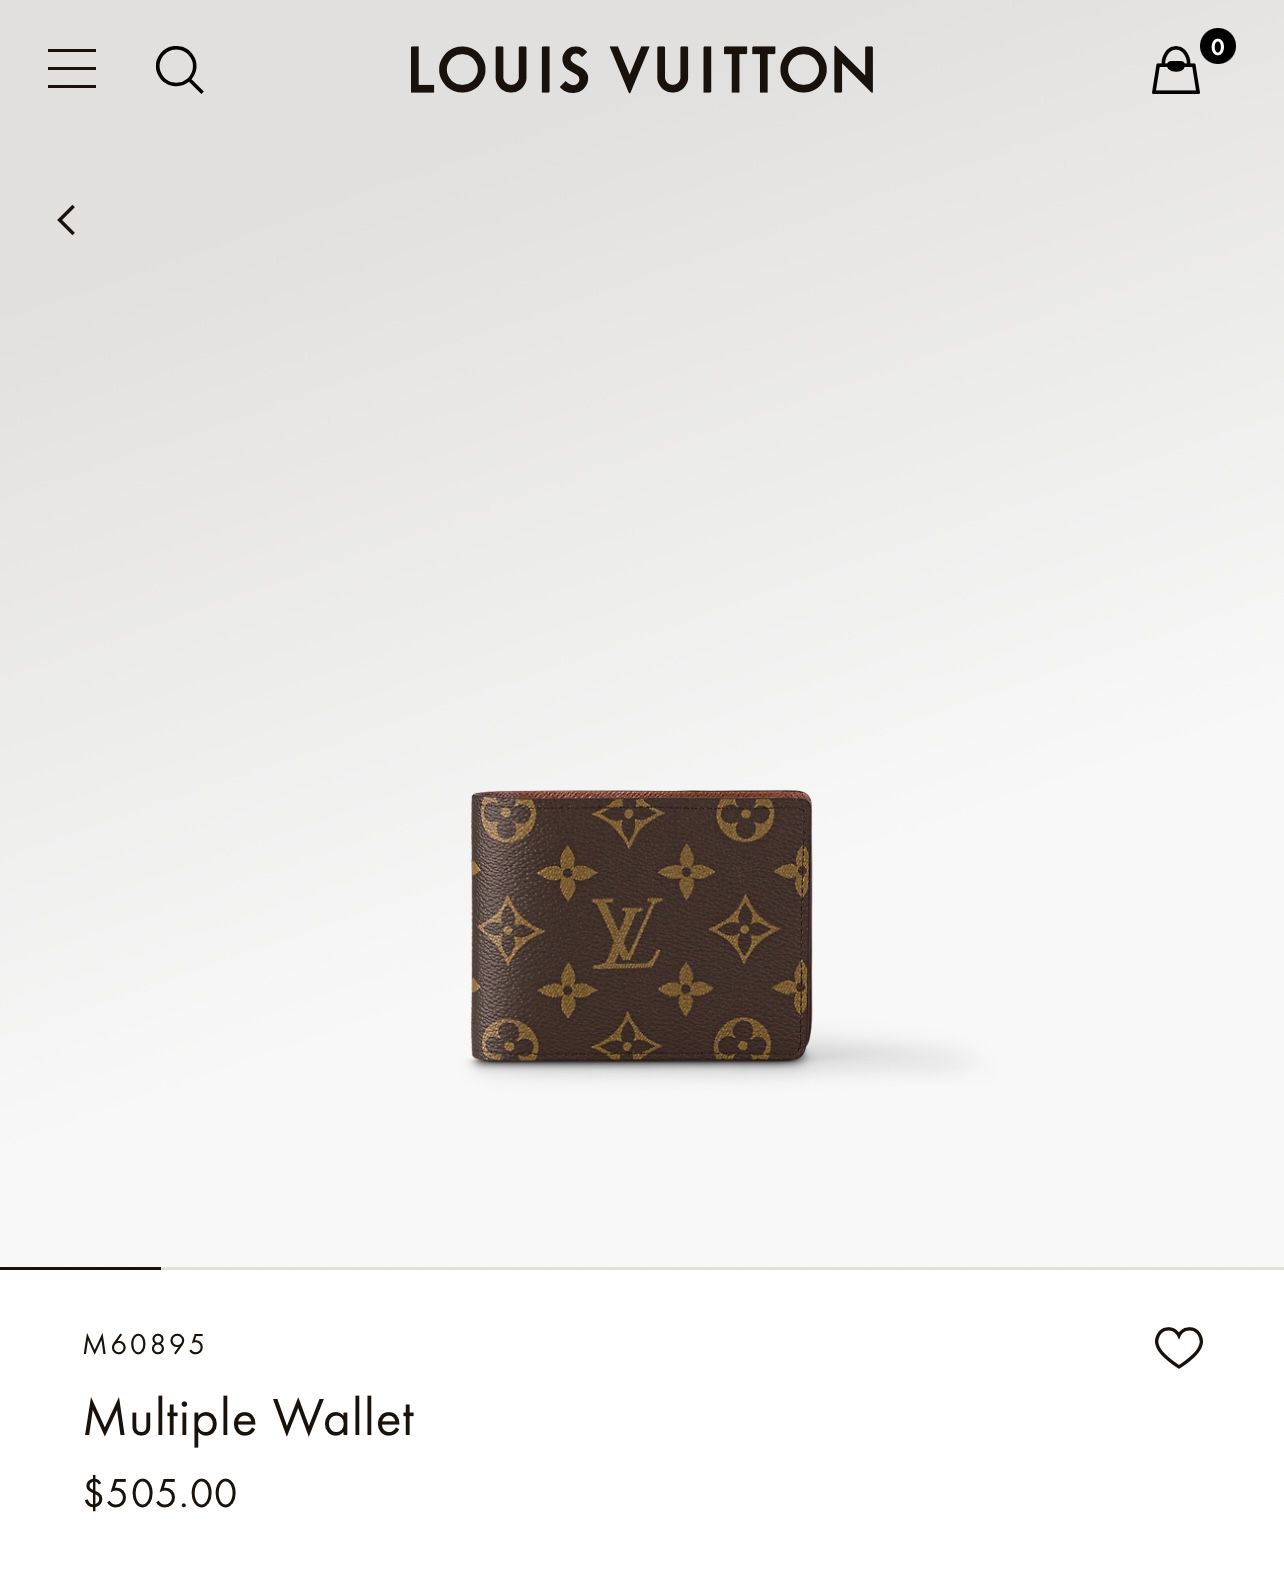 Brand New Louis Vuitton Wallet